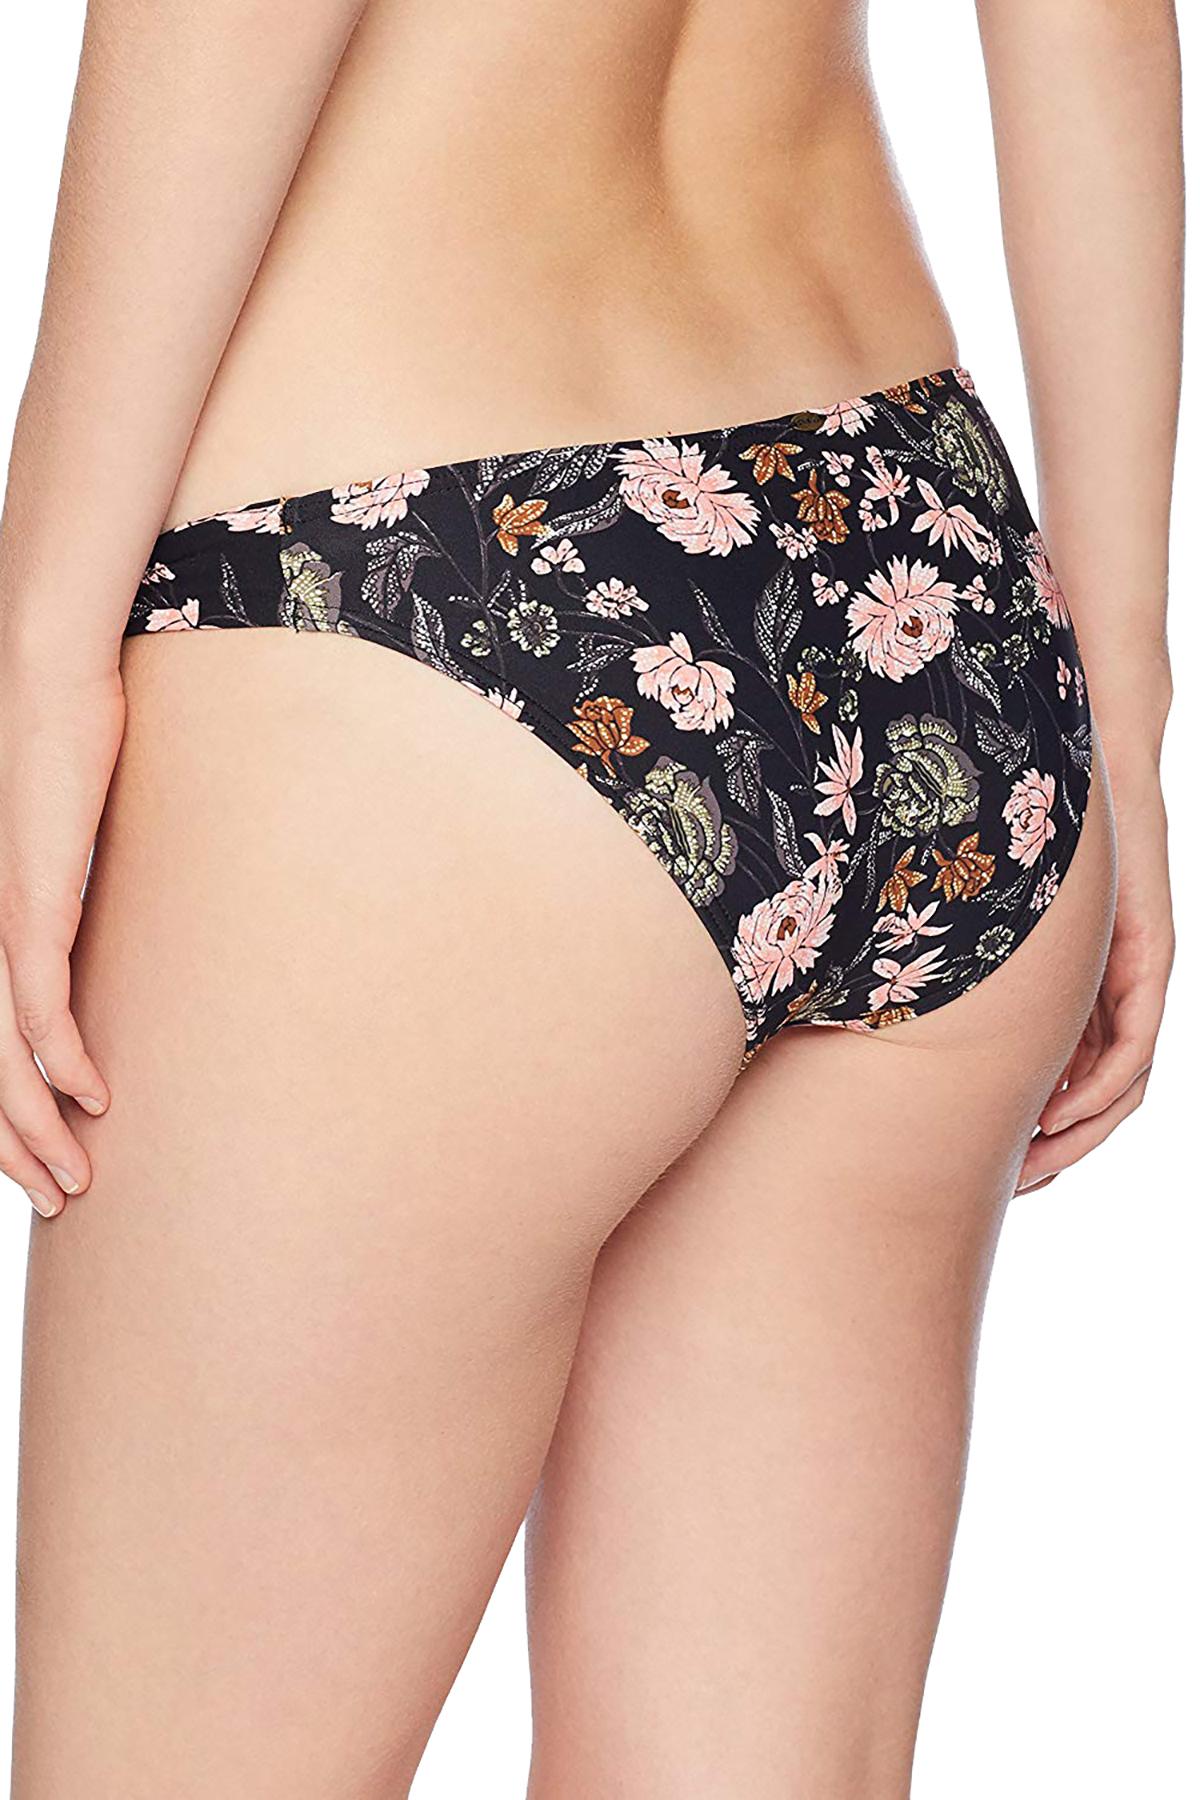 O'Neill Black Floral Colleen Twist Tab Side Bikini Bottom